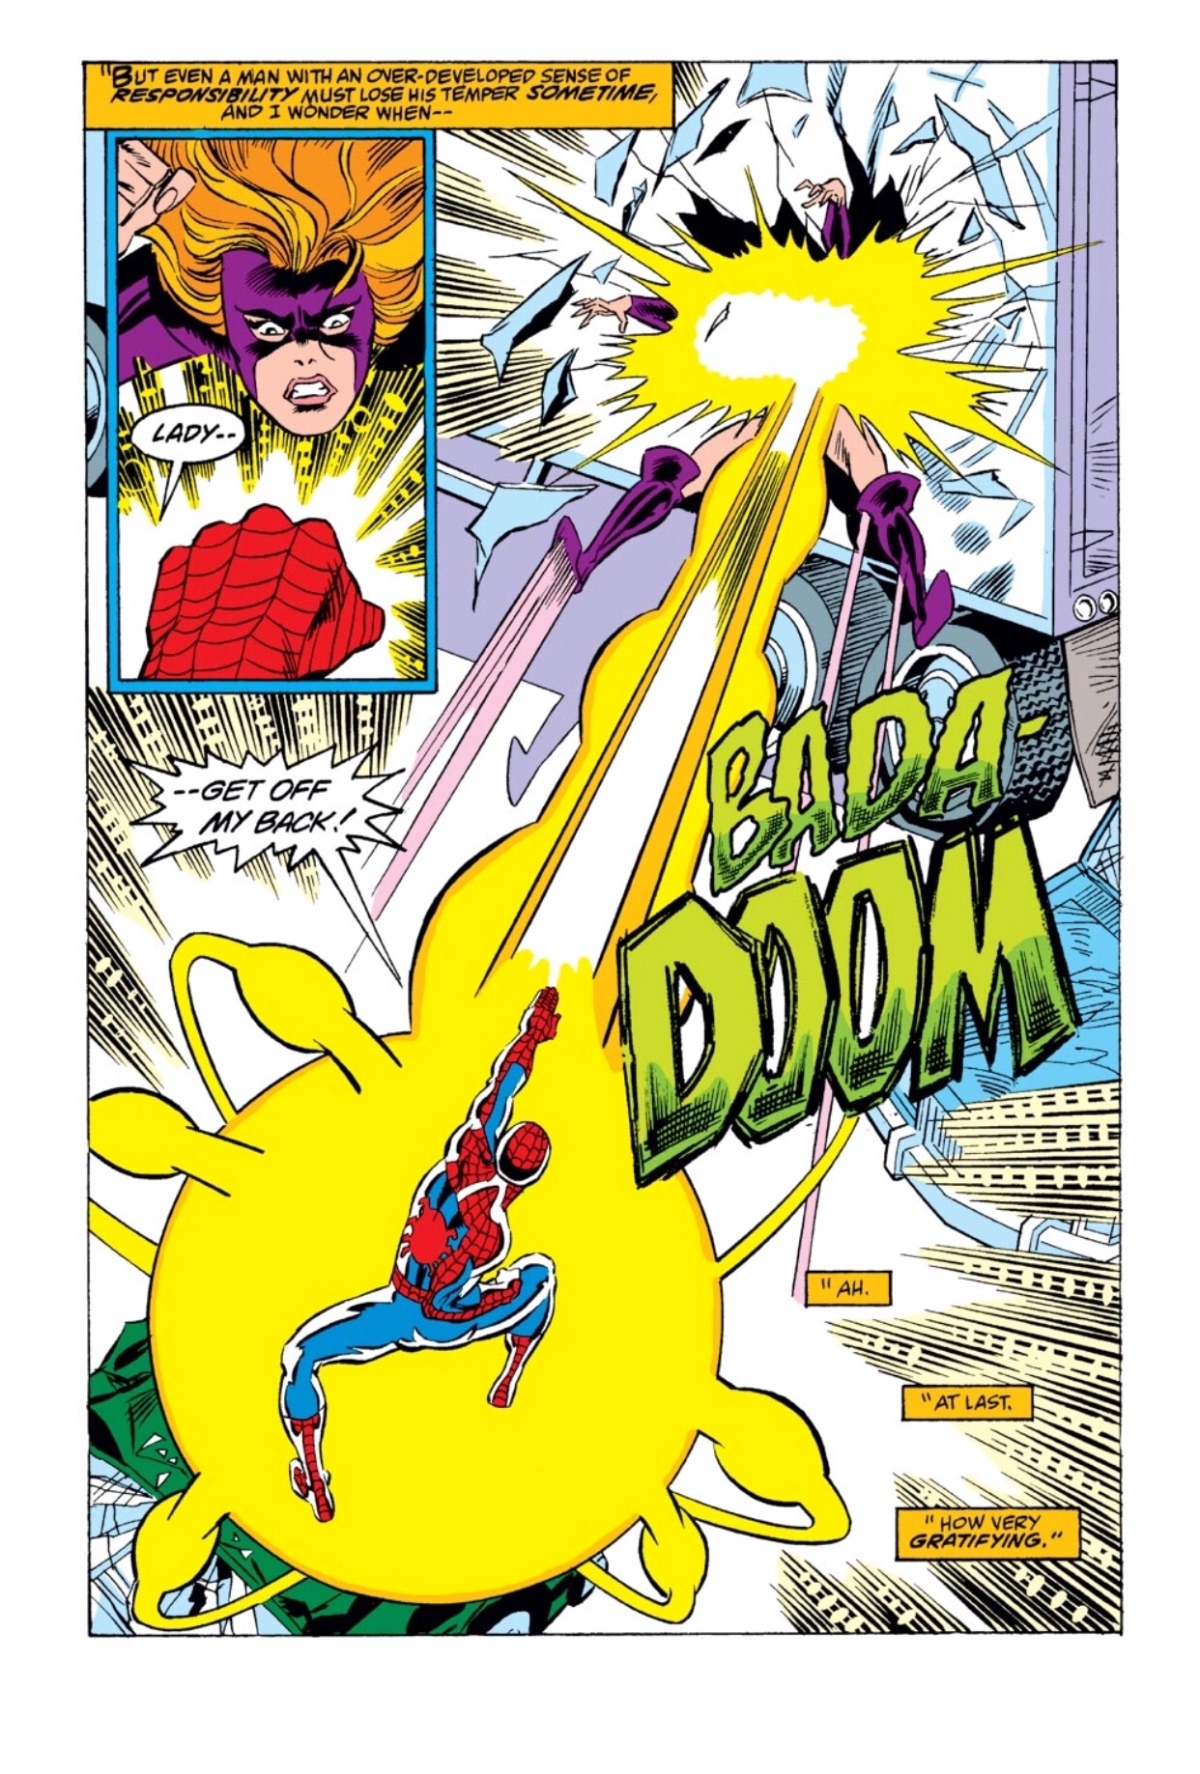 Cosmic Powered Amazing Spider-Man vs. Titania (Web of Spider-Man #59, 1989)